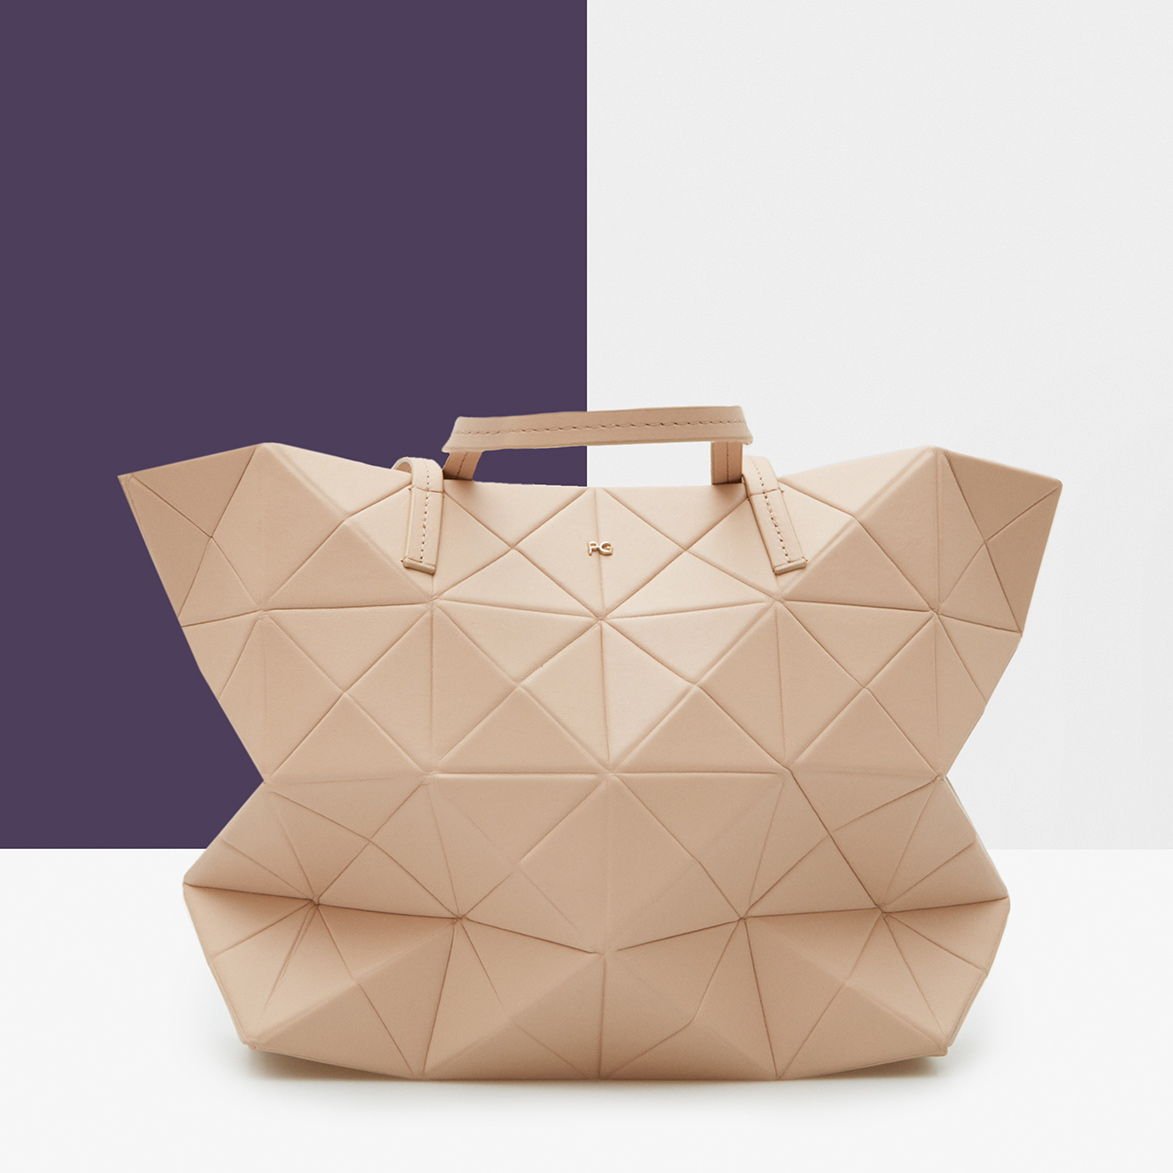 تويتر \ PURIFICACION GARCÍA على تويتر: "Bolso #Origami | Descubre todos los colores en tiendas y https://t.co/CMRASfNwu5 https://t.co/QowXs1iLHe"